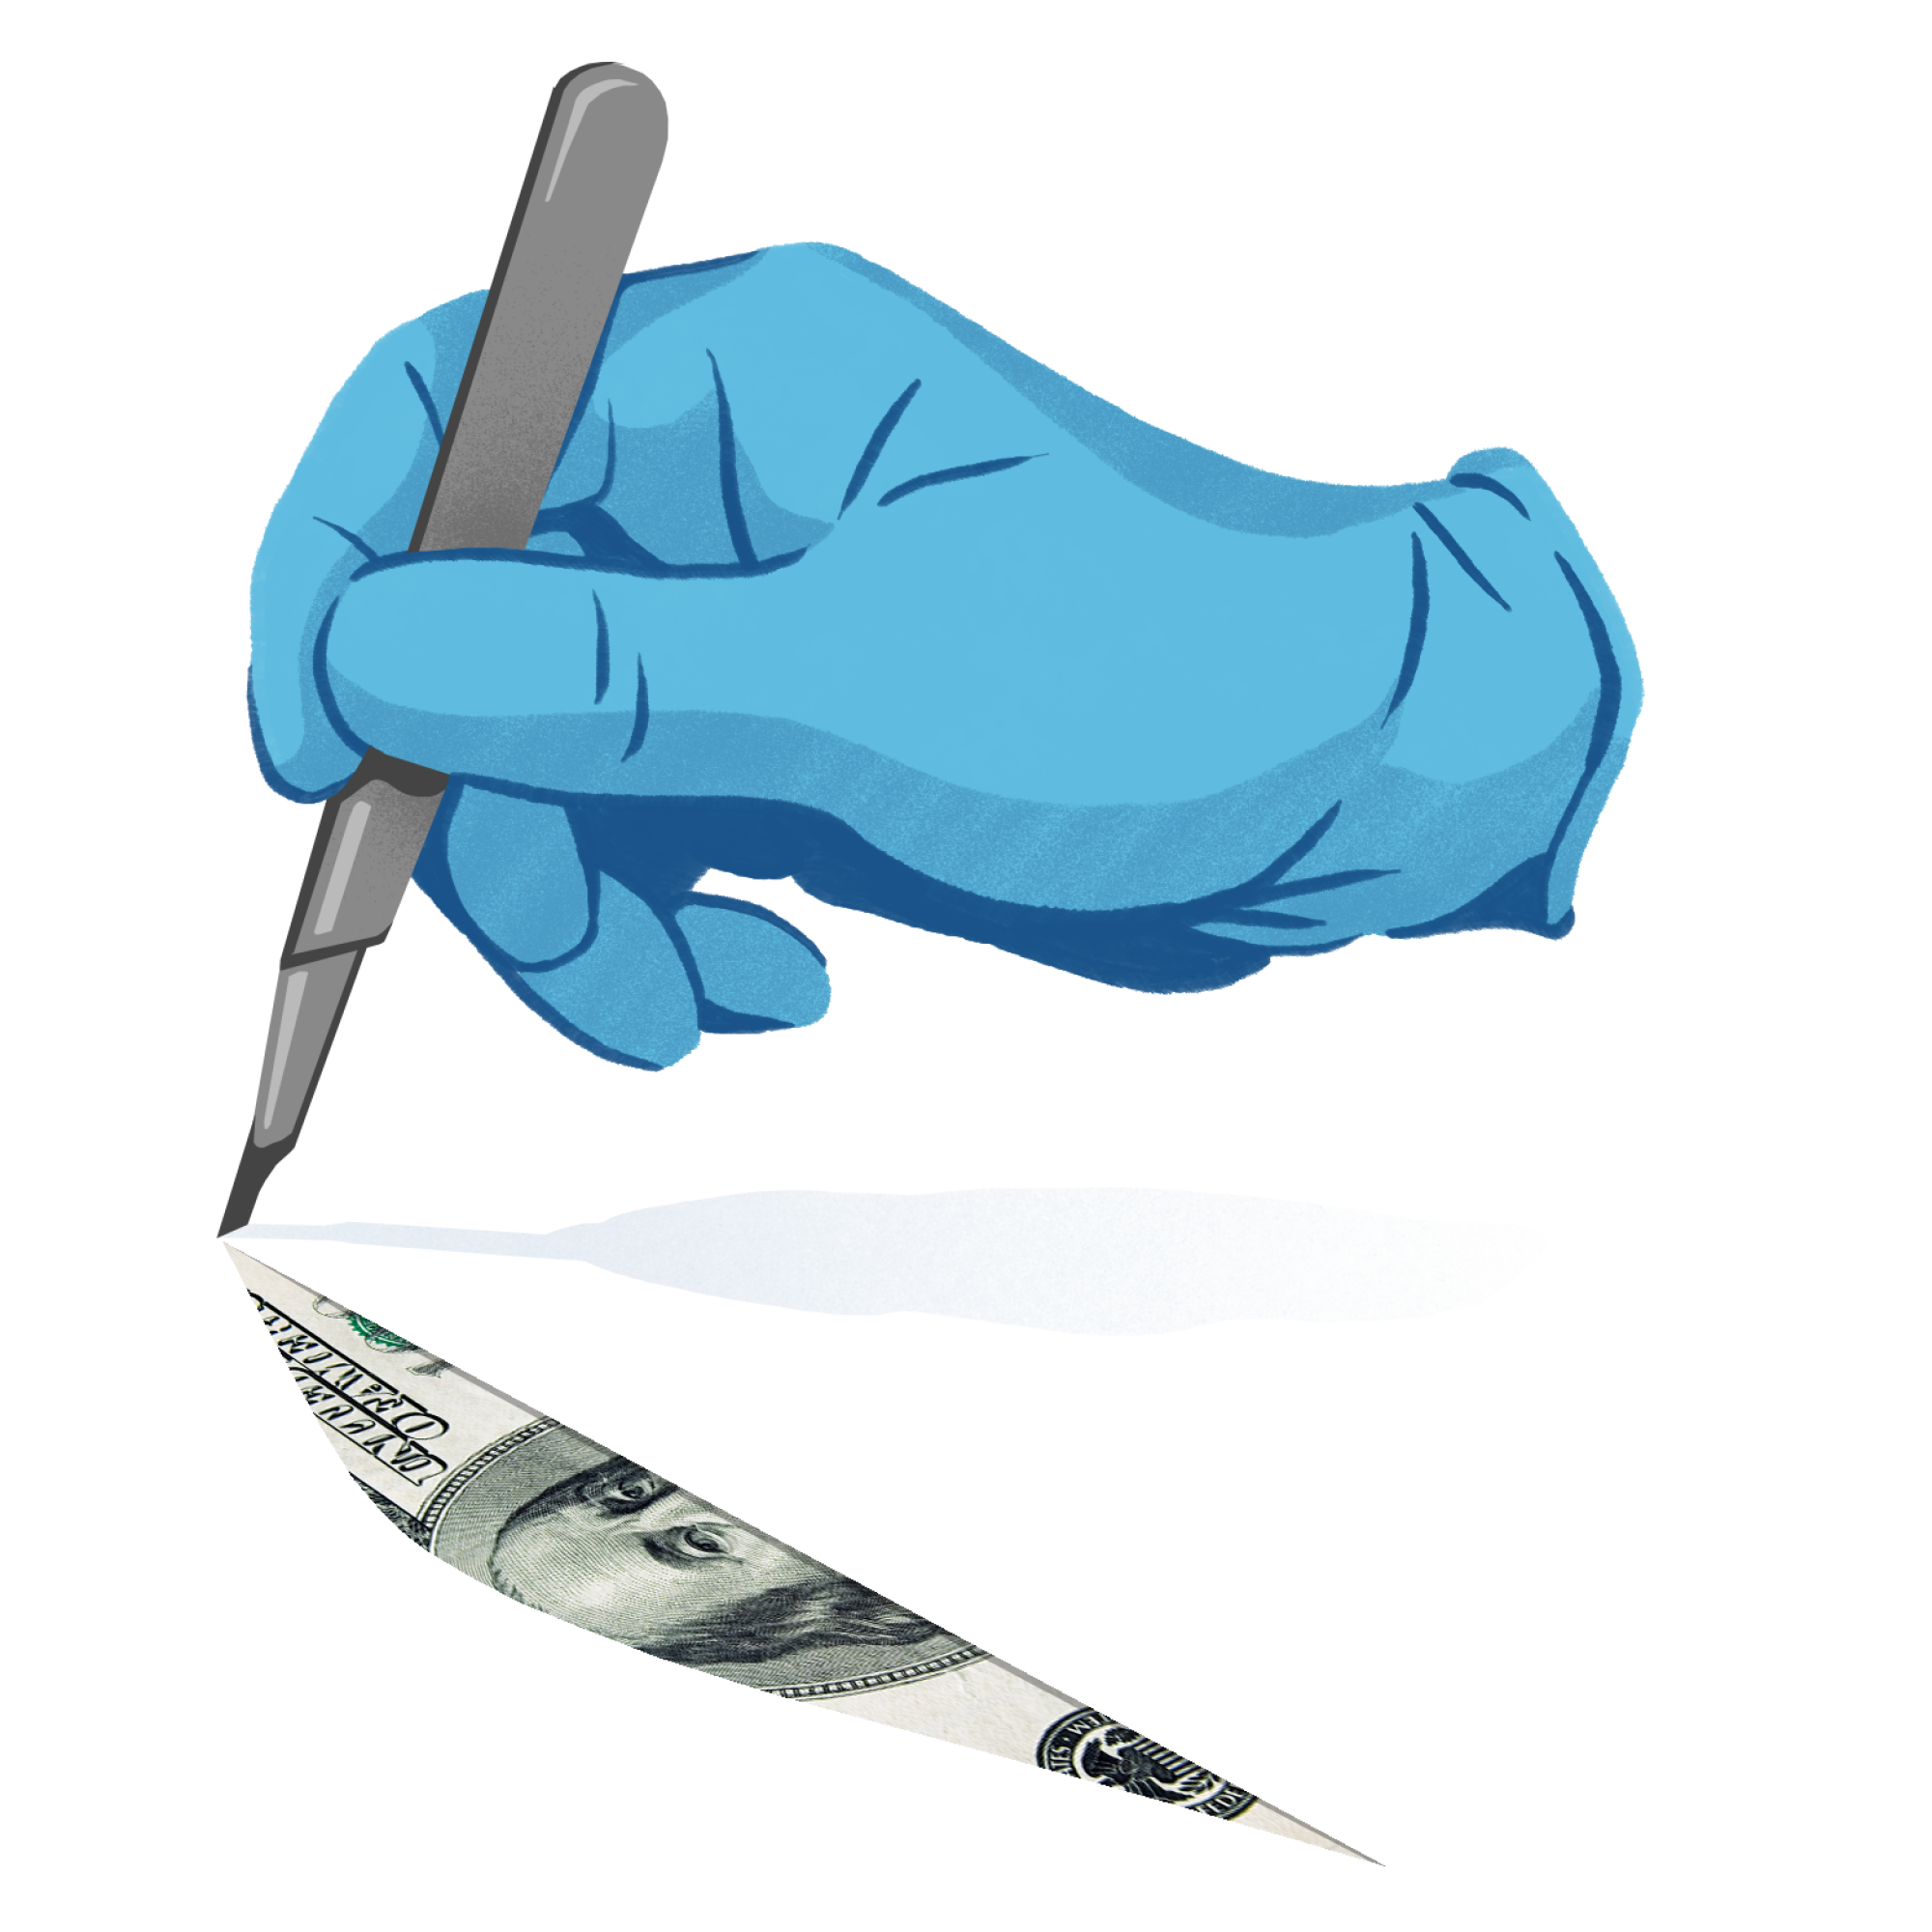 Conceptual illustration shows surgeon's scalpel revealing money